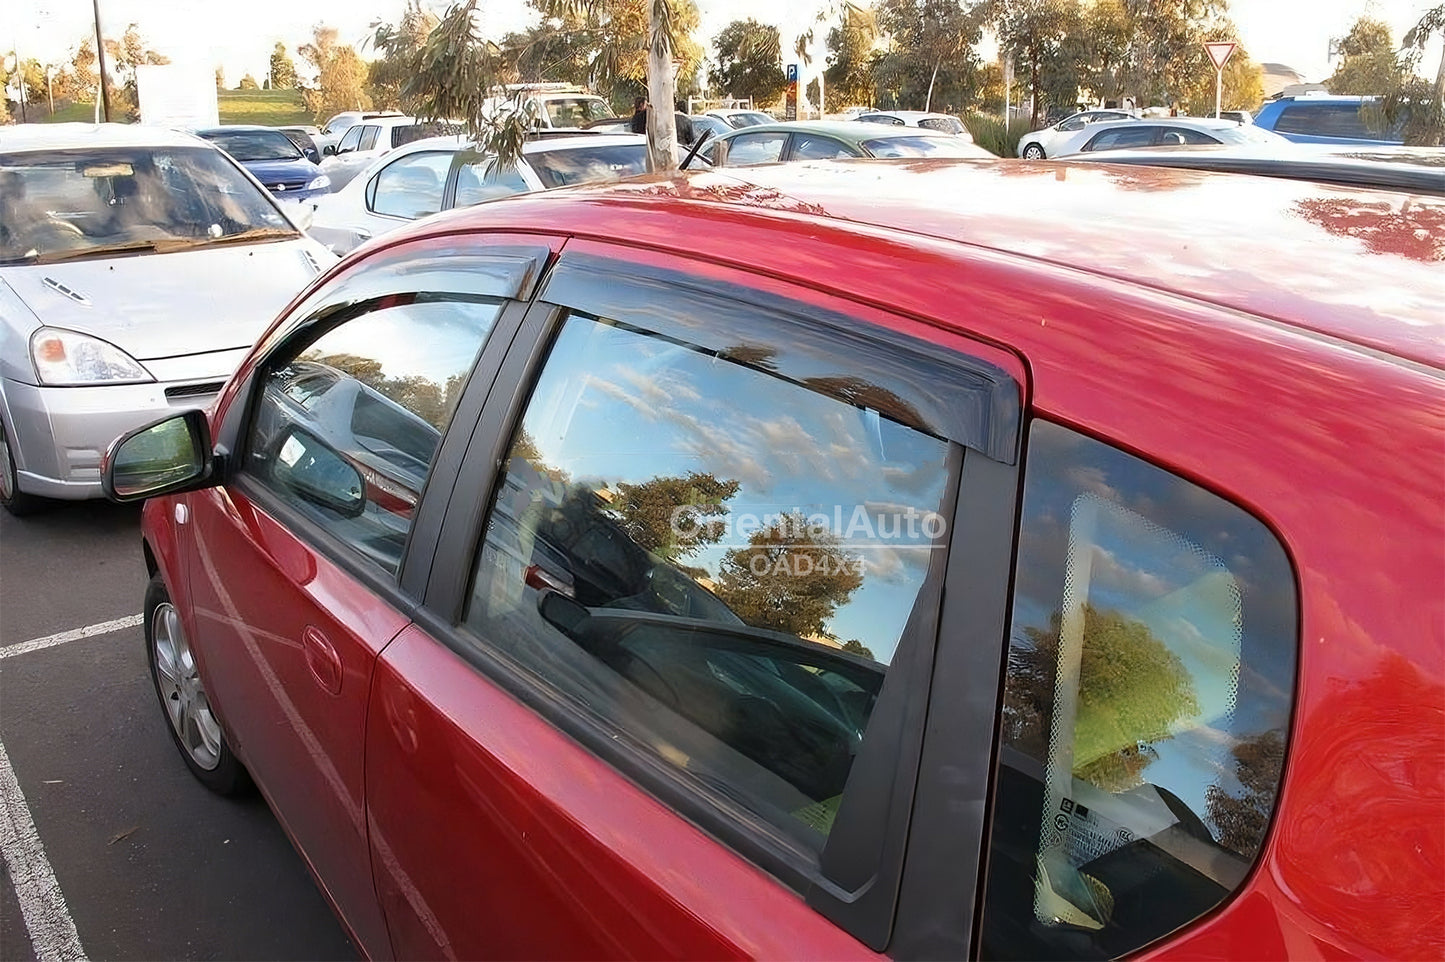 Premium Weathershields Weather Shields Window Visor For Holden Barina Hatch 5D TK Series 2005-2011